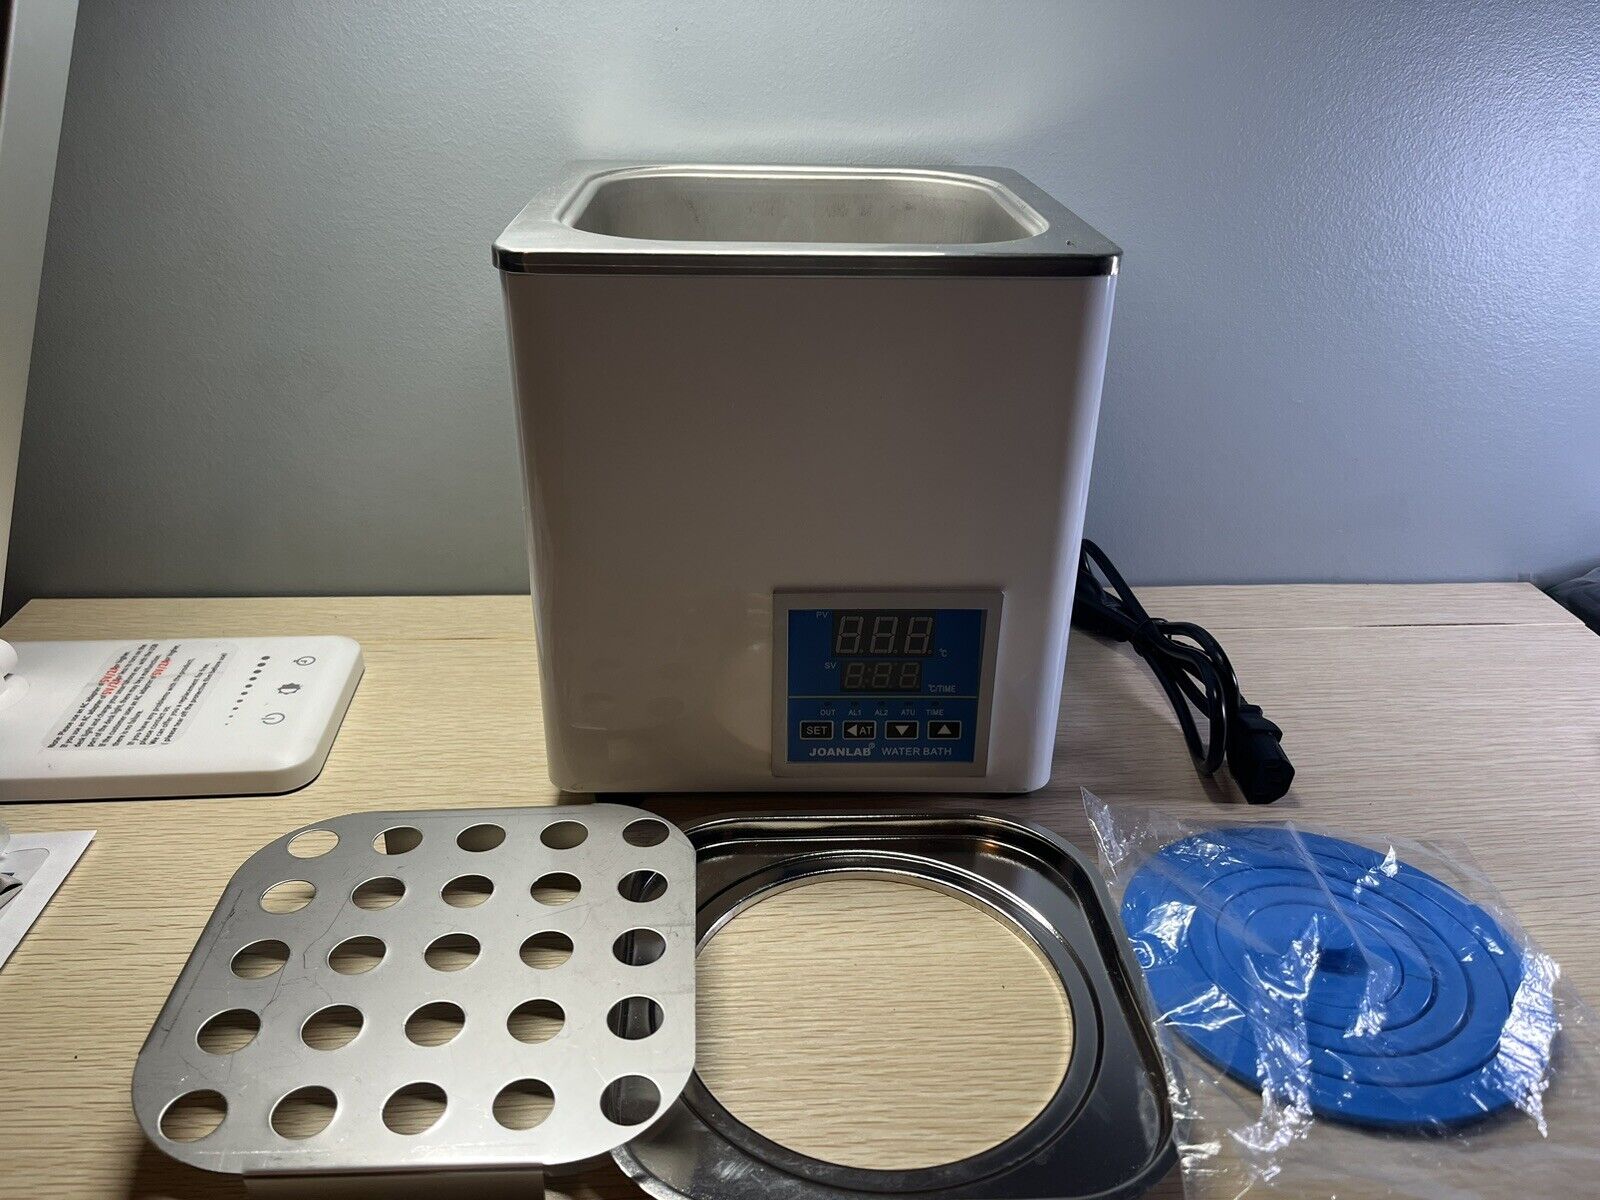 Joanlab Digital Thermostatic Water Bath Heater w/Opening 3.5L 300W RT-100°C 110V